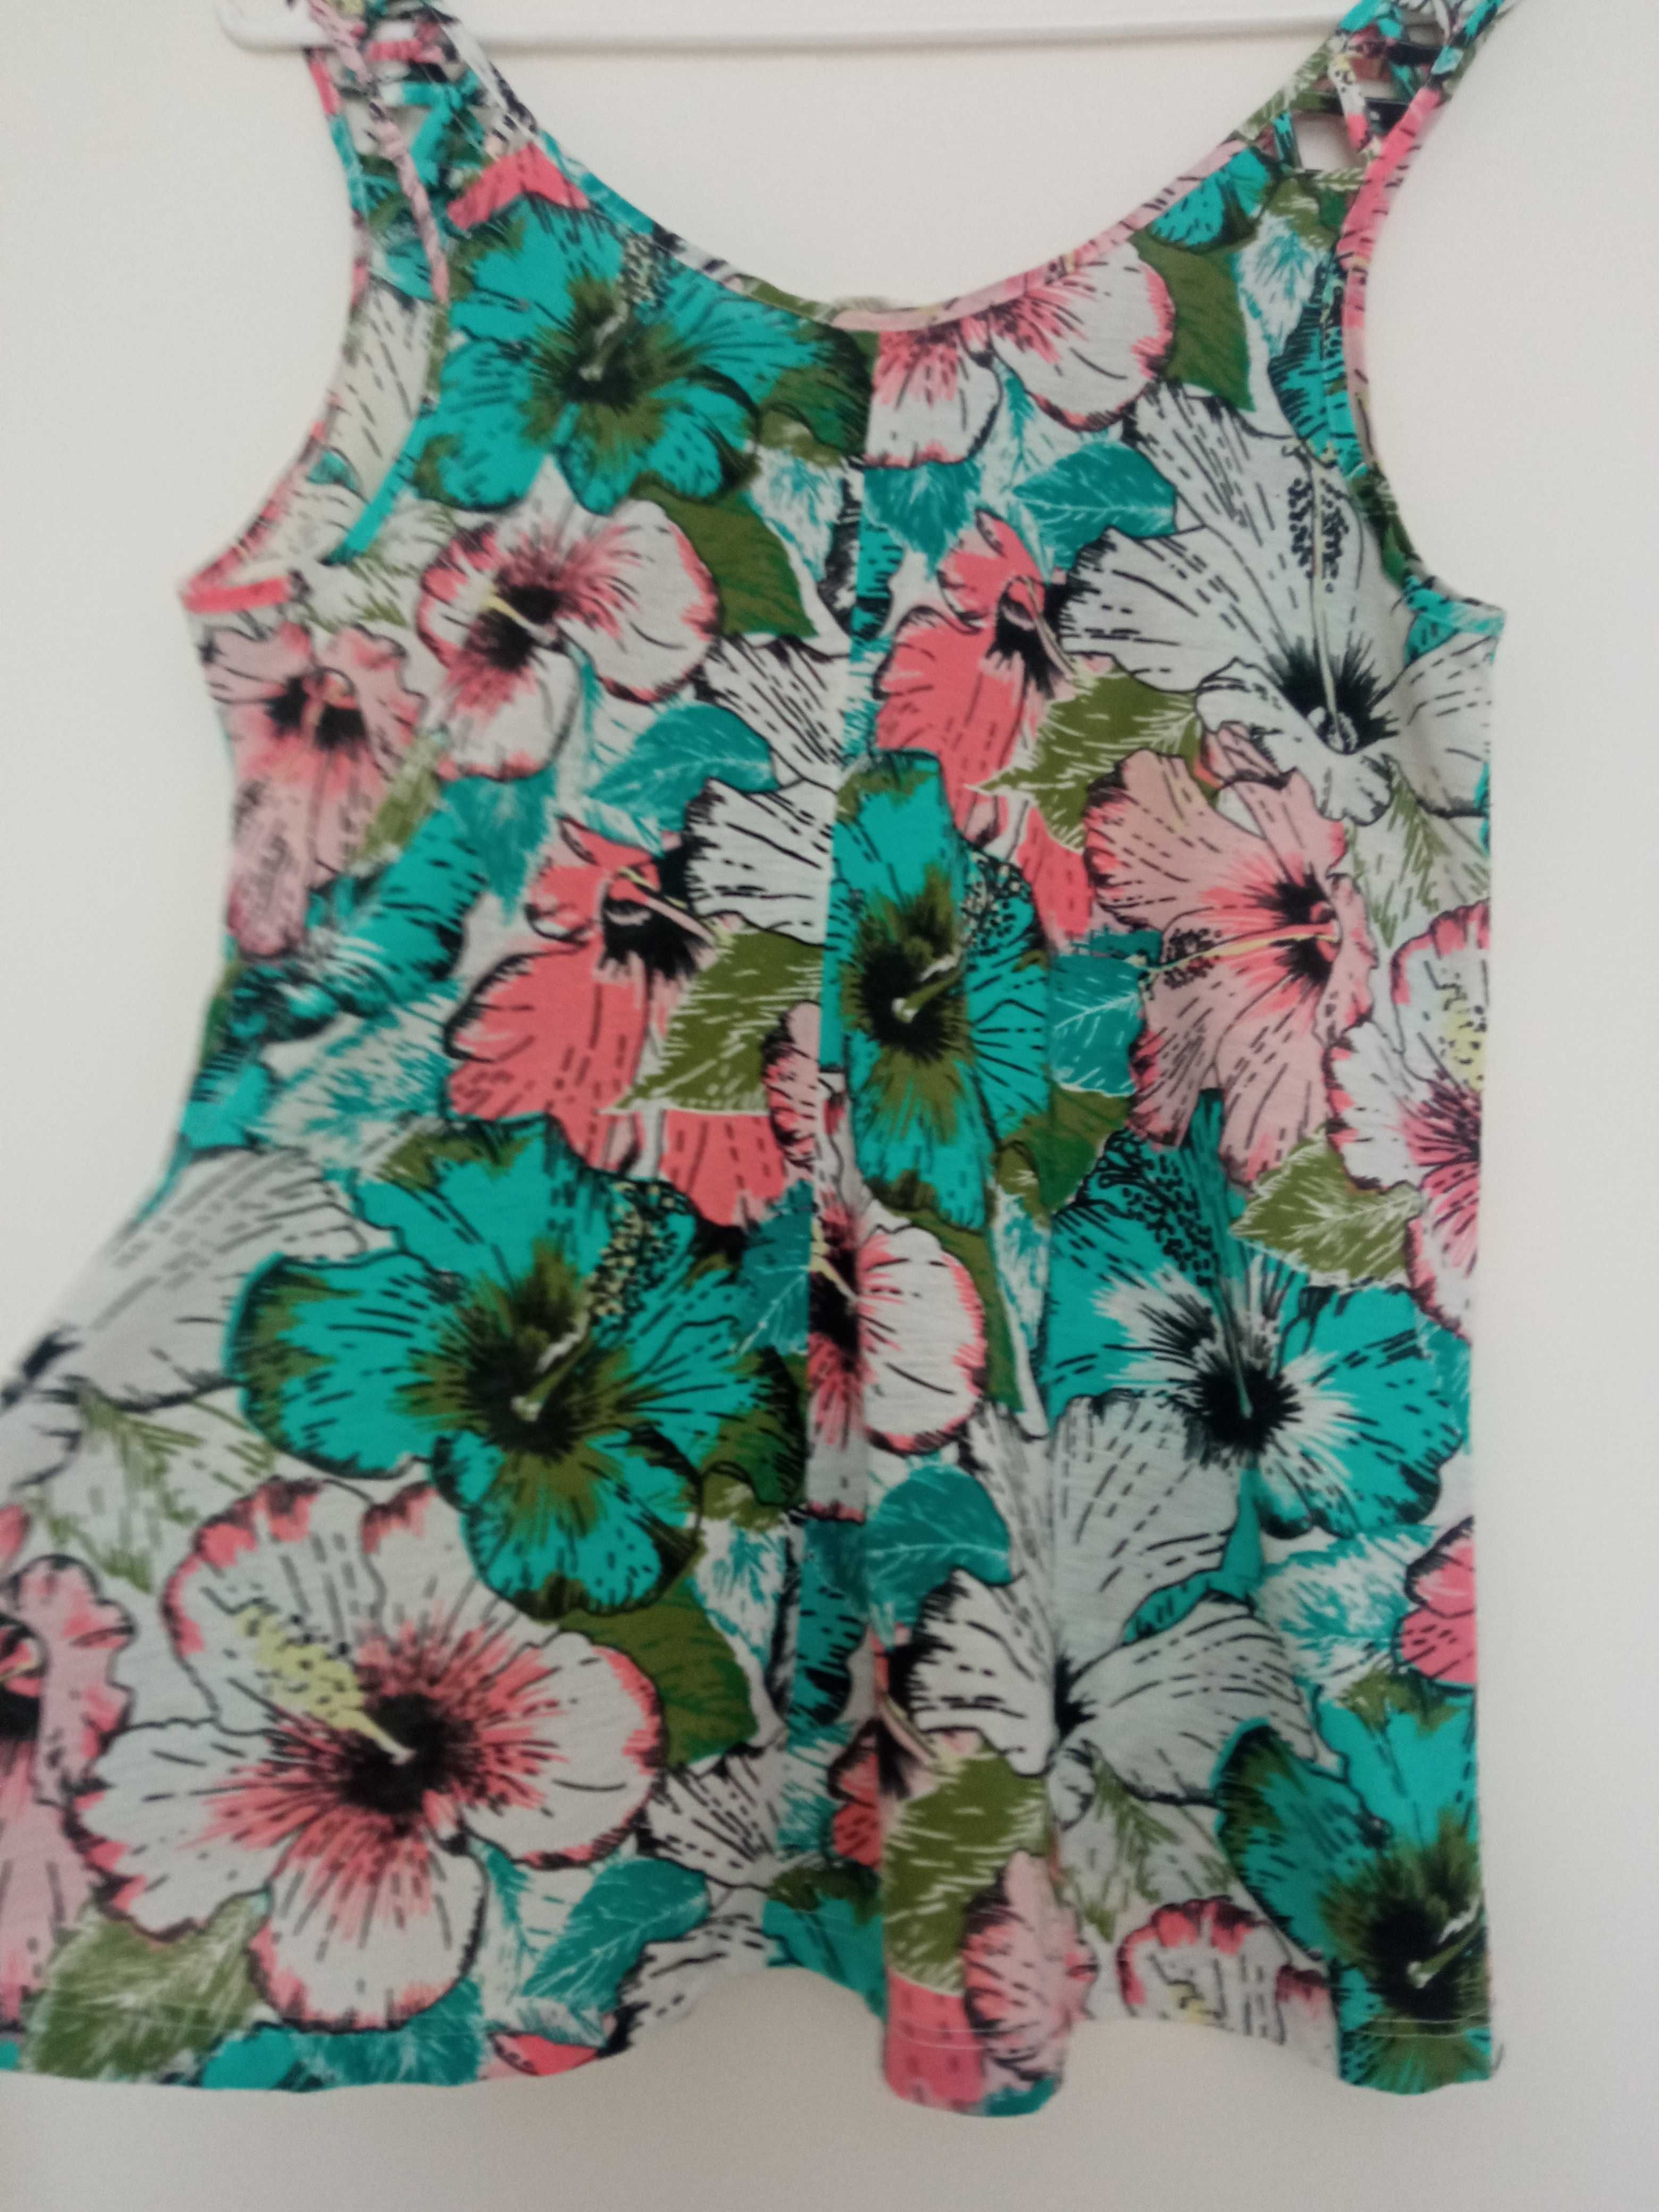 Bluzka letnia Top H&M S 36 kwiaty na ramiączkach na lato